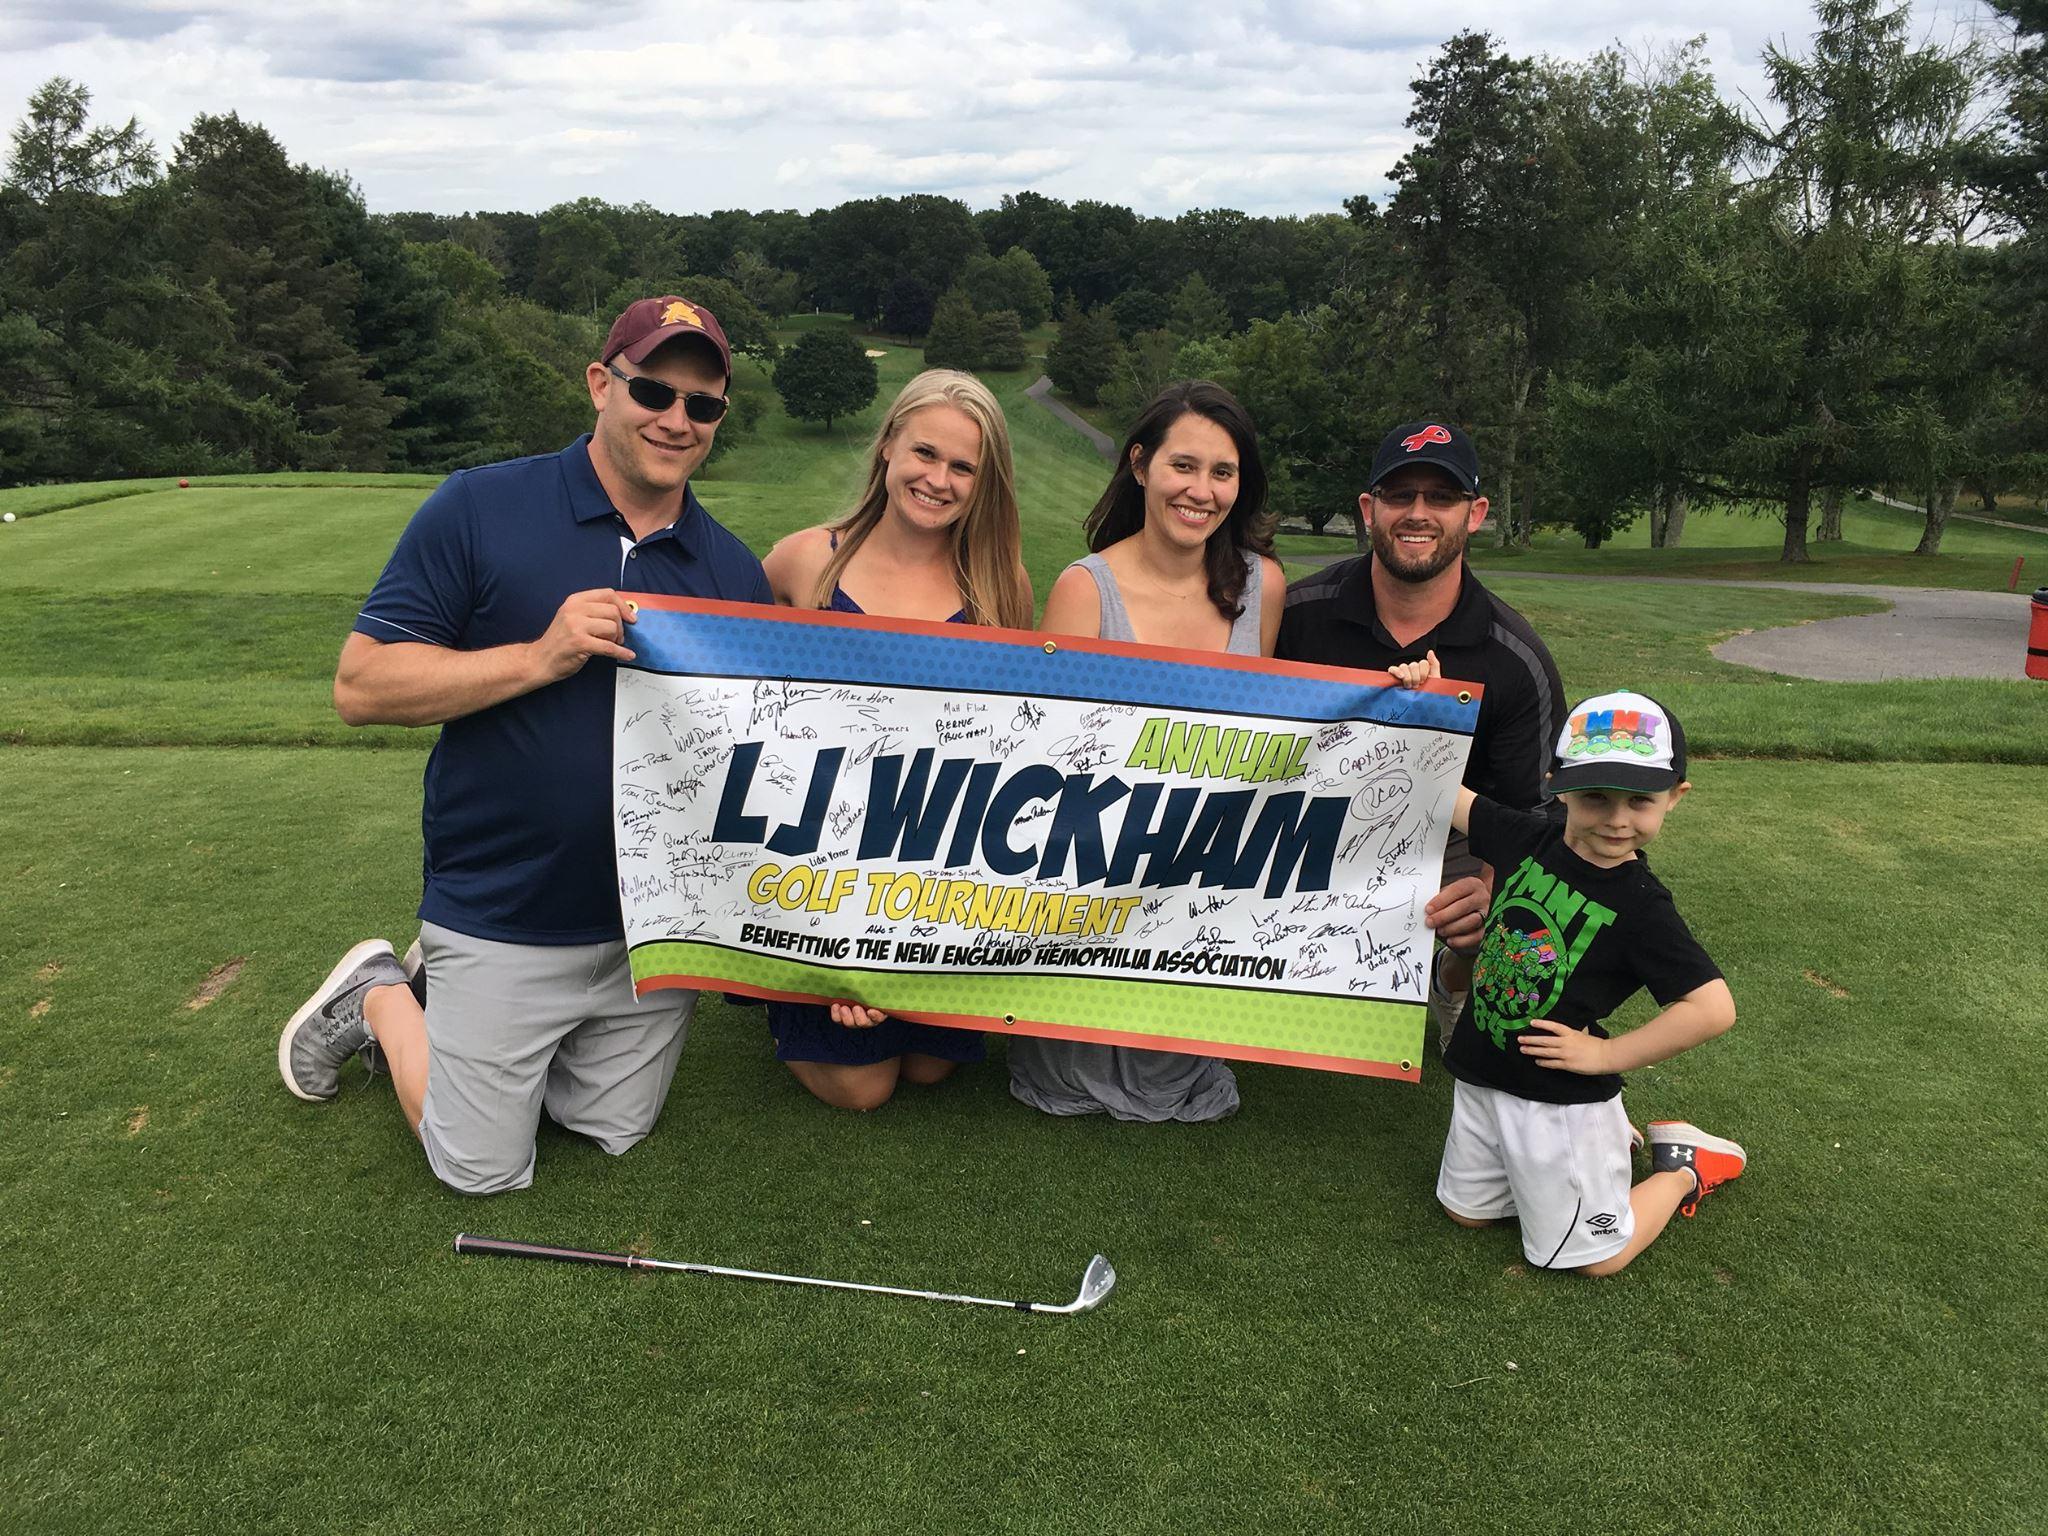 LJ Wickham Golf Tournament